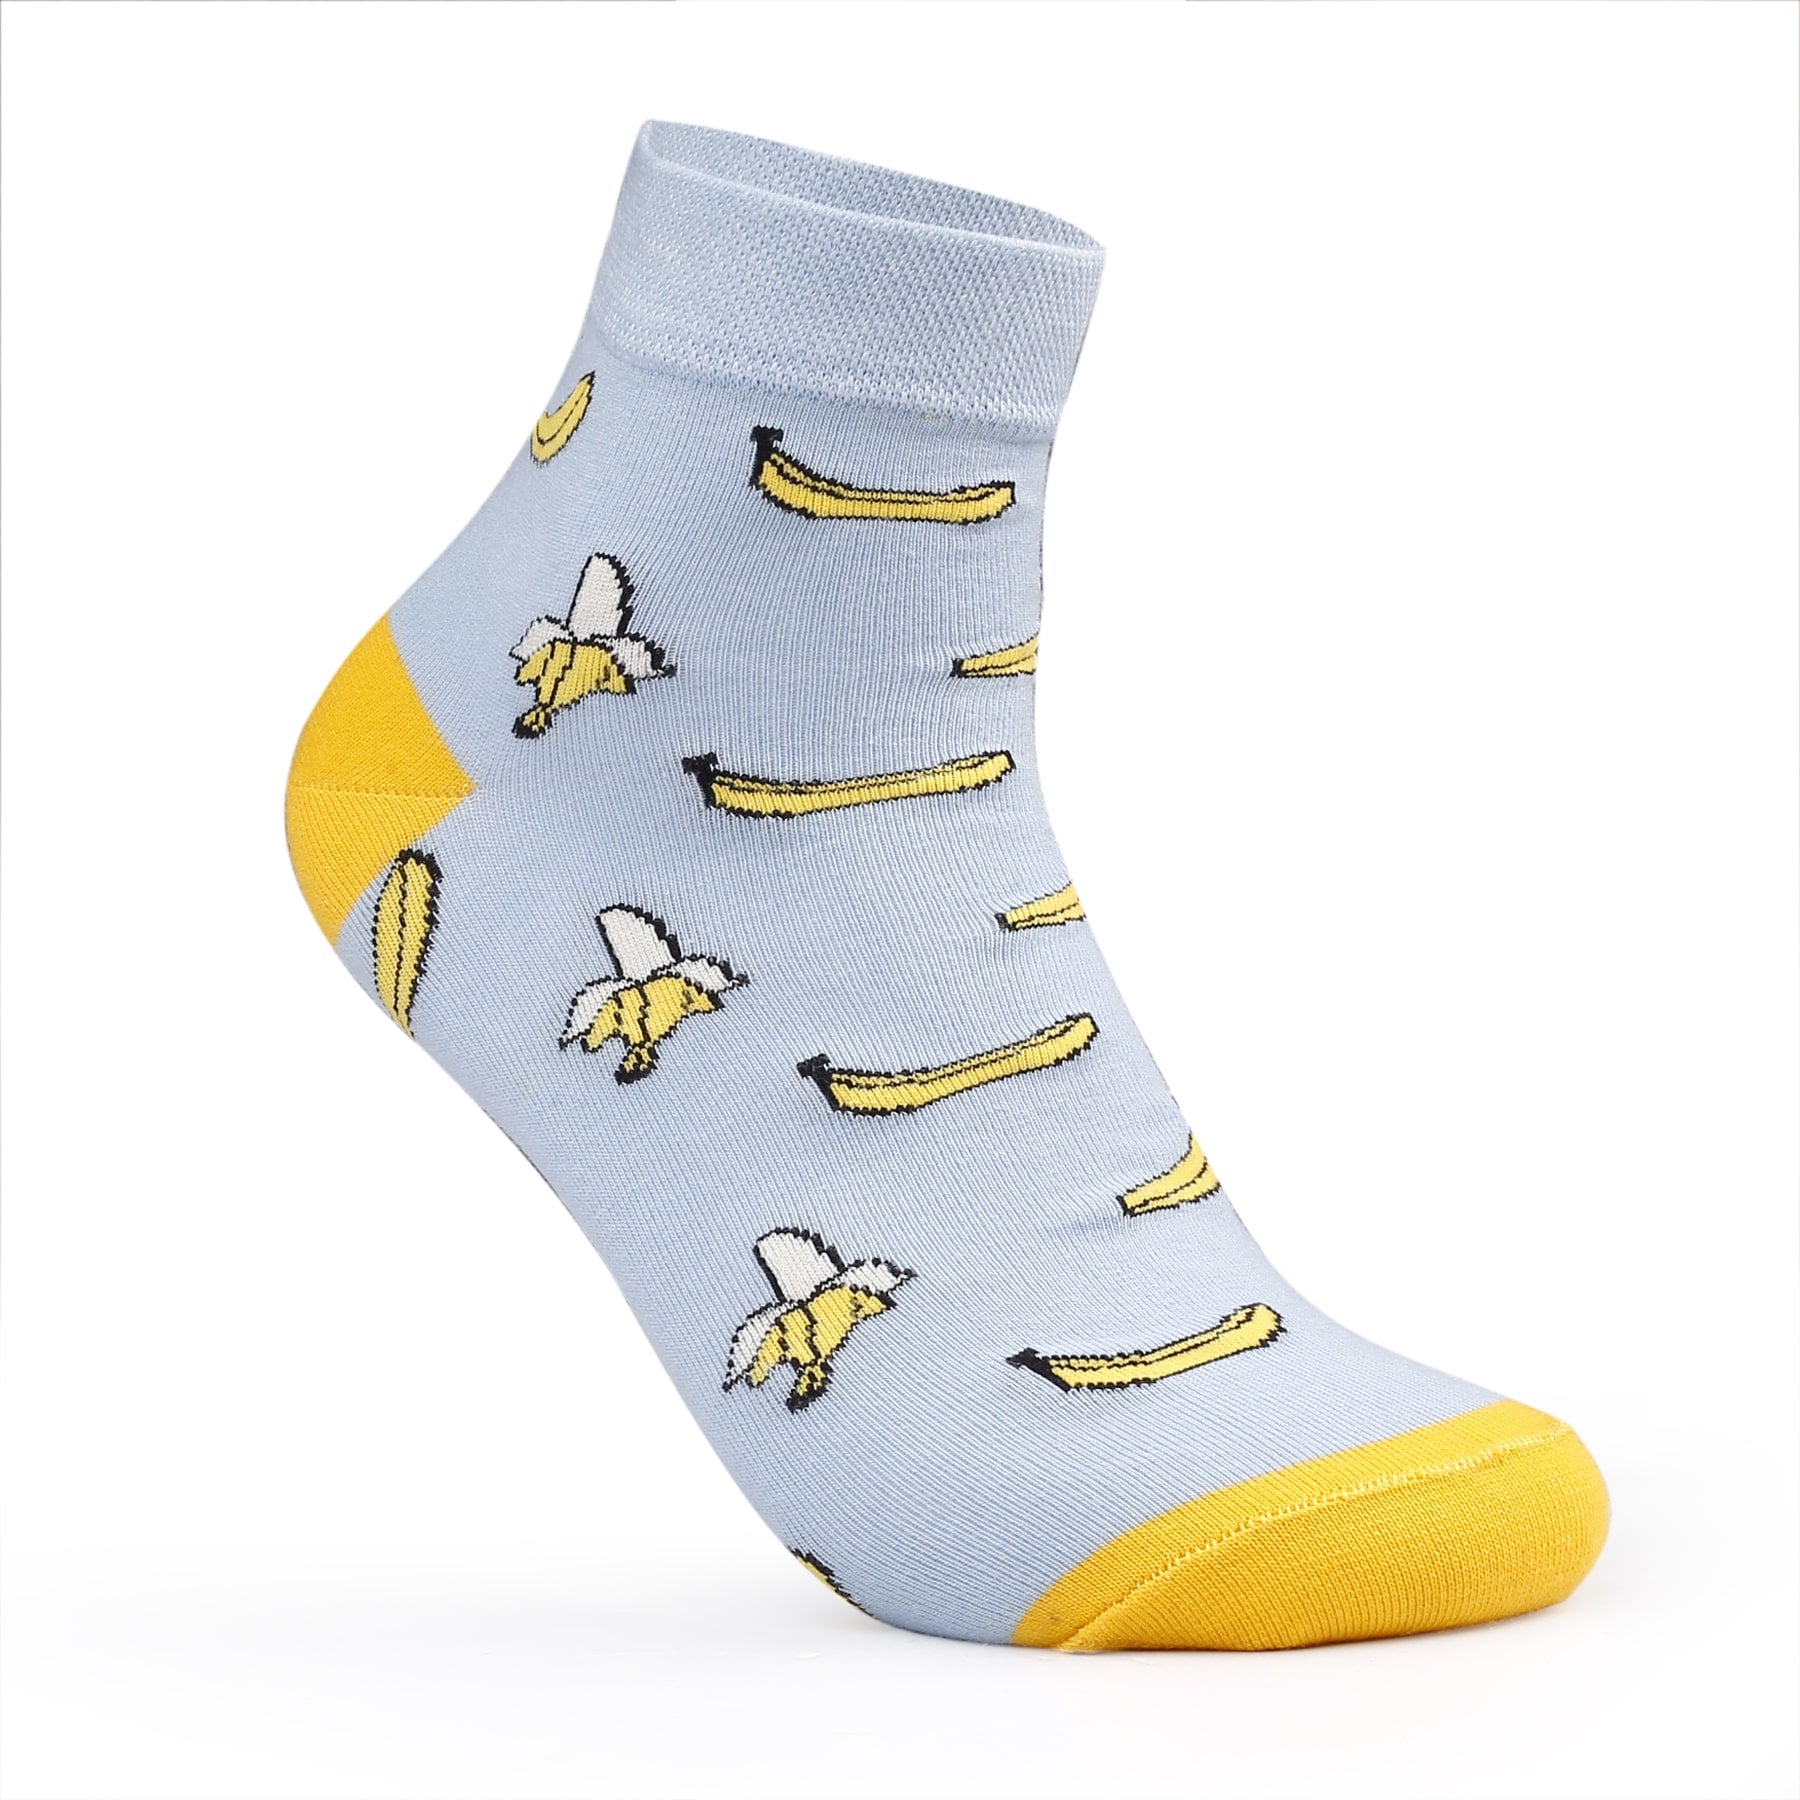 Bacca Bucci Ankle Length comfort Socks for Men (1 Pair)